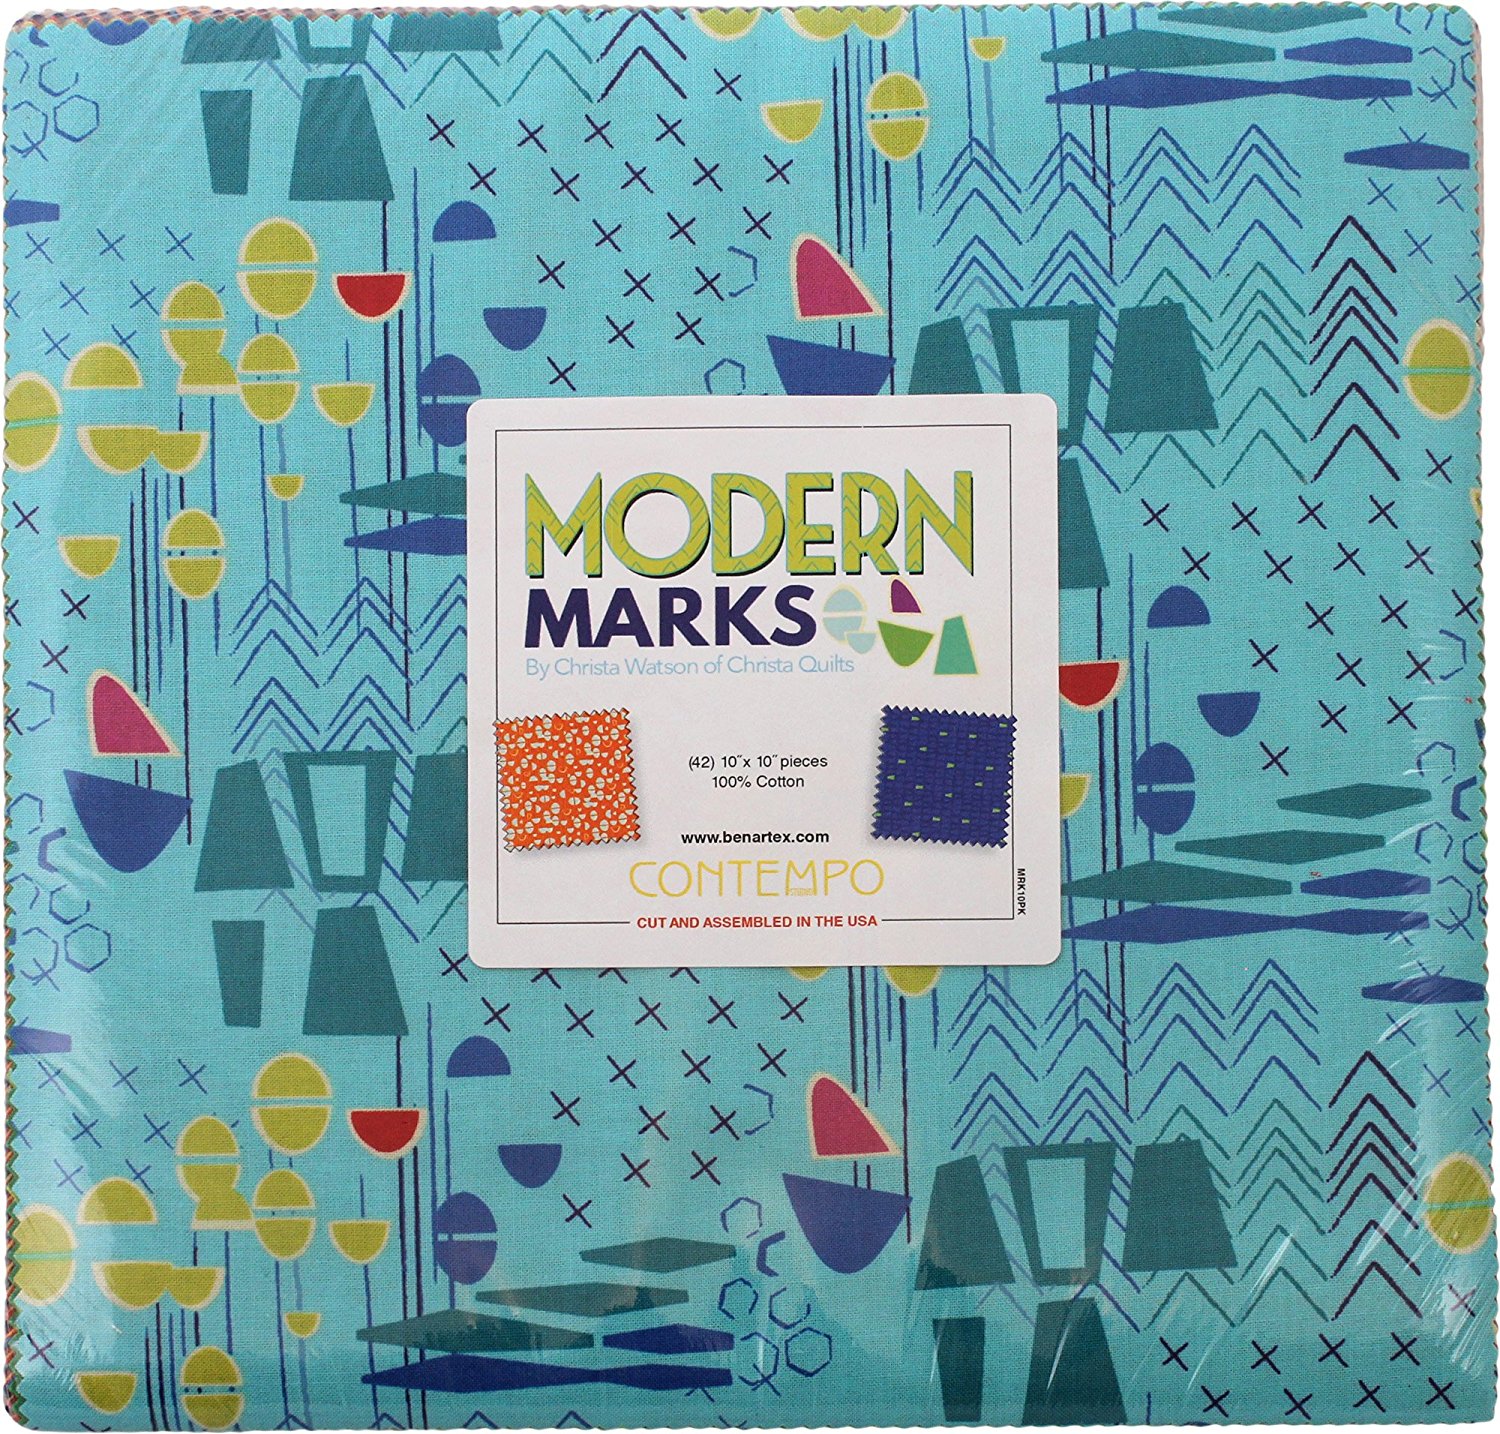 Modern Marks fabric layer cake